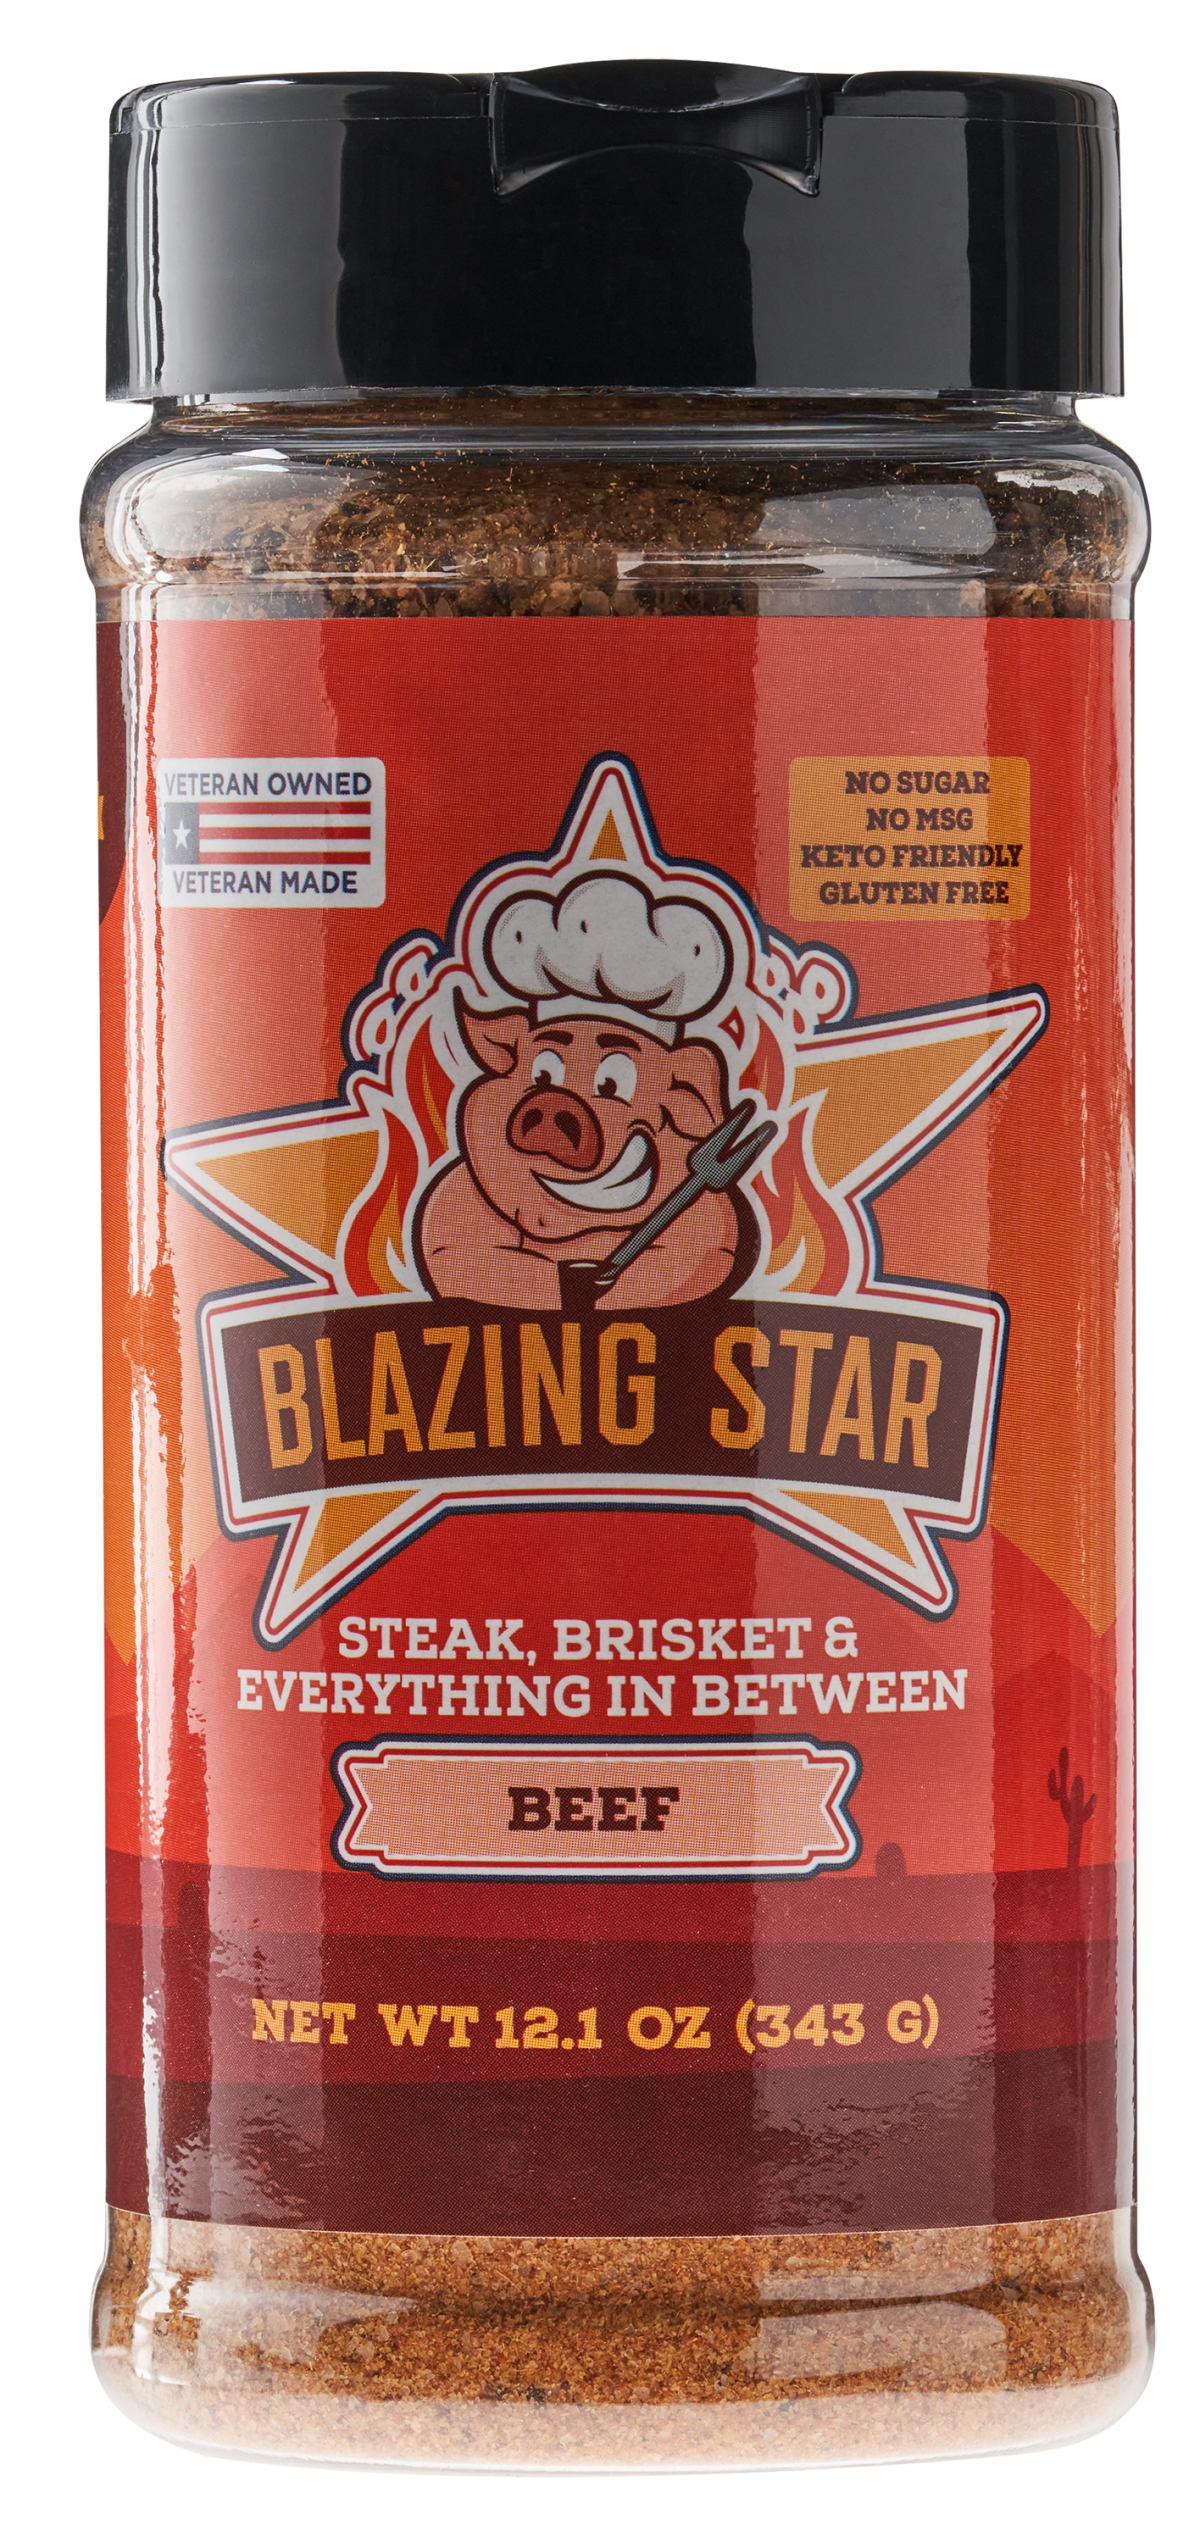 Blazing Star BBQ Blazing Star Beef Rub and Seasoning